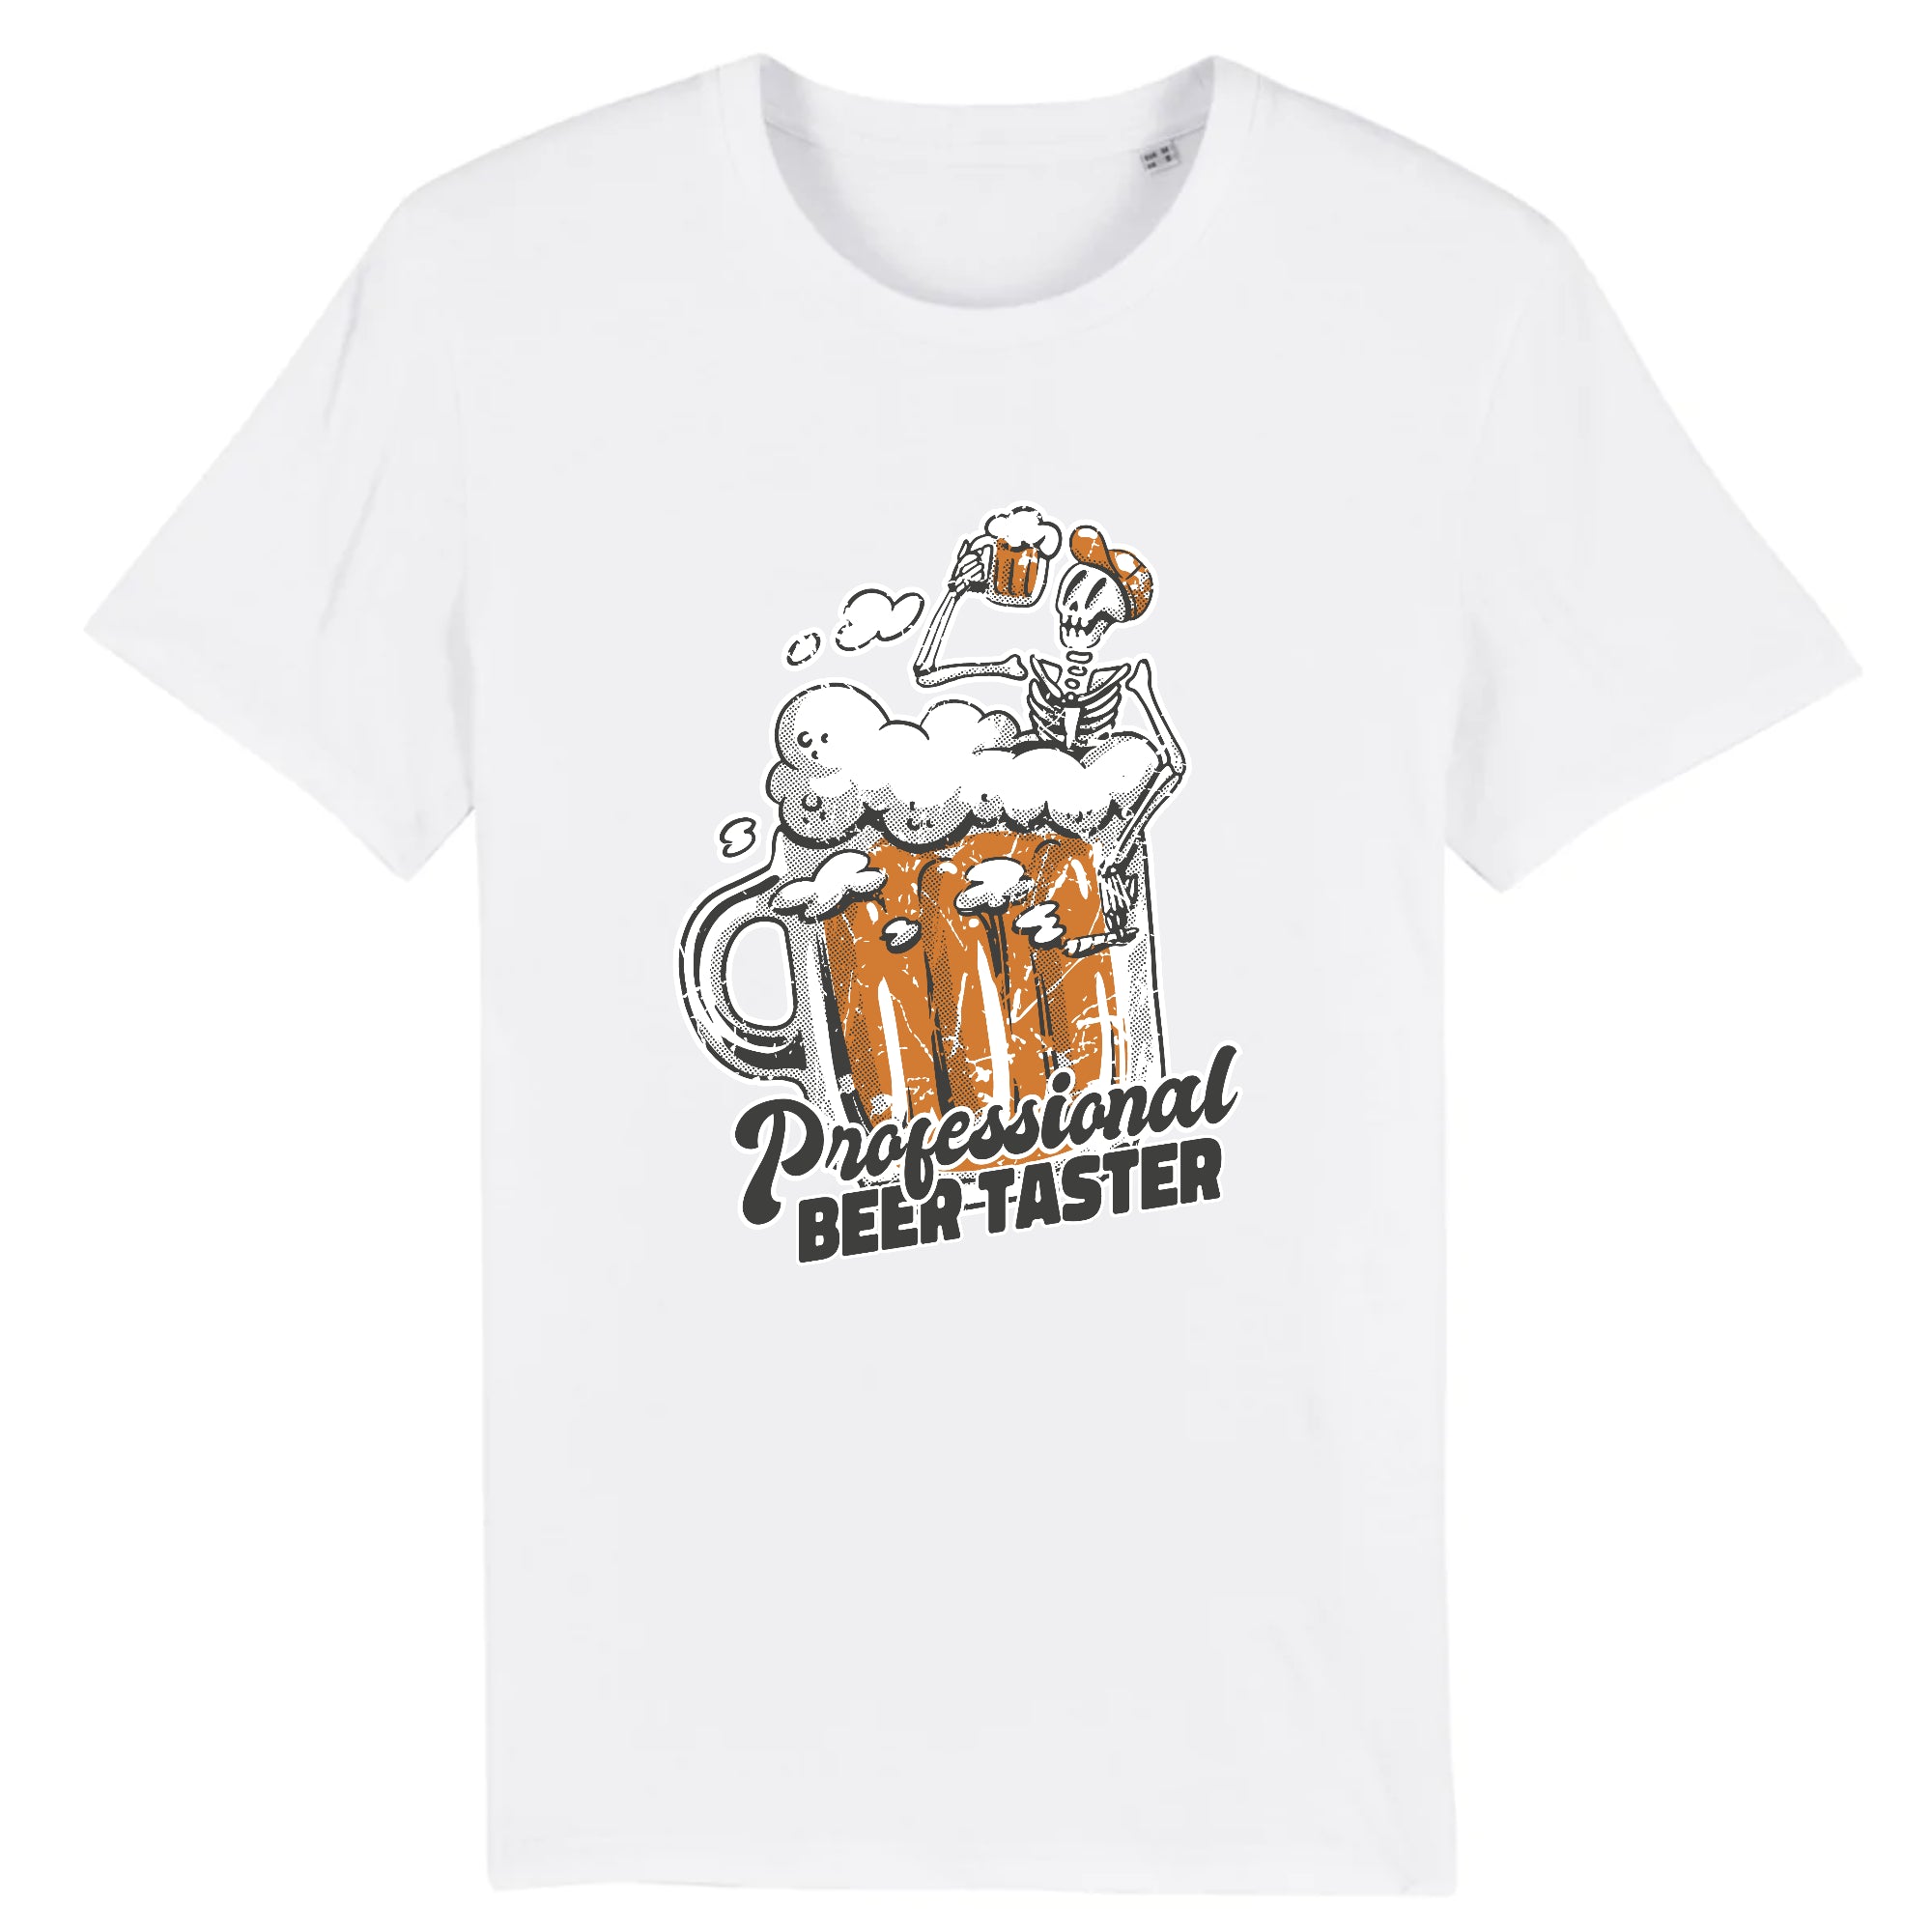 T-Shirt - Beer taster